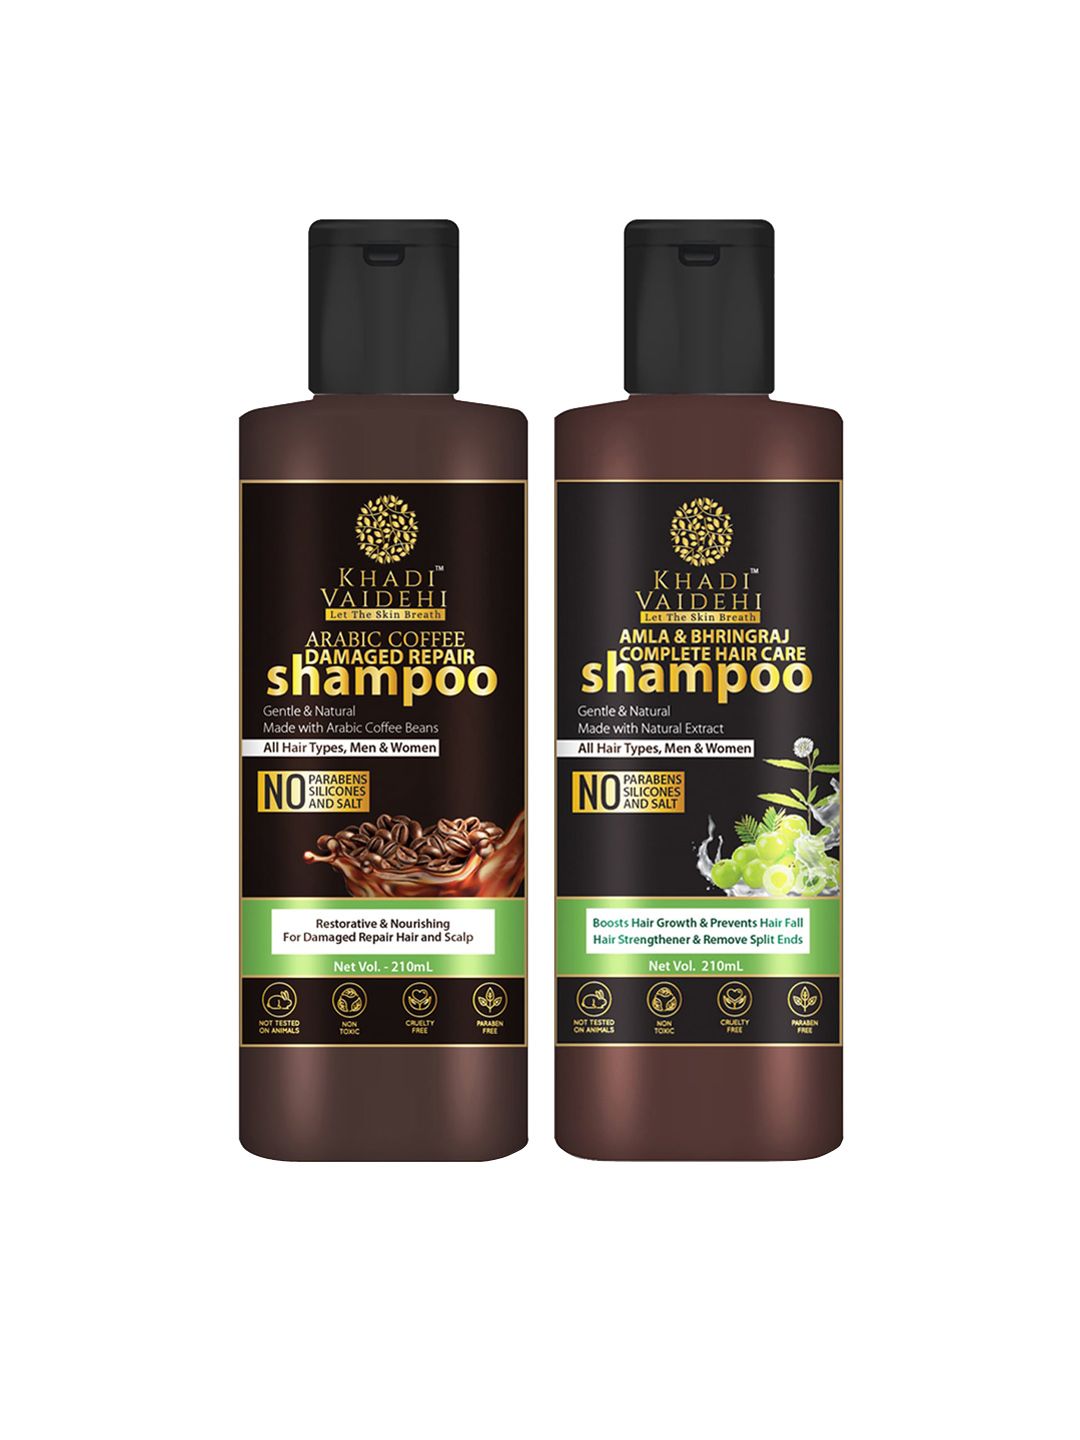 Khadi Vaidehi Set of 2 Arabic Coffee Damaged Repair Shampoo for All Hair Types- 210ml Each Price in India